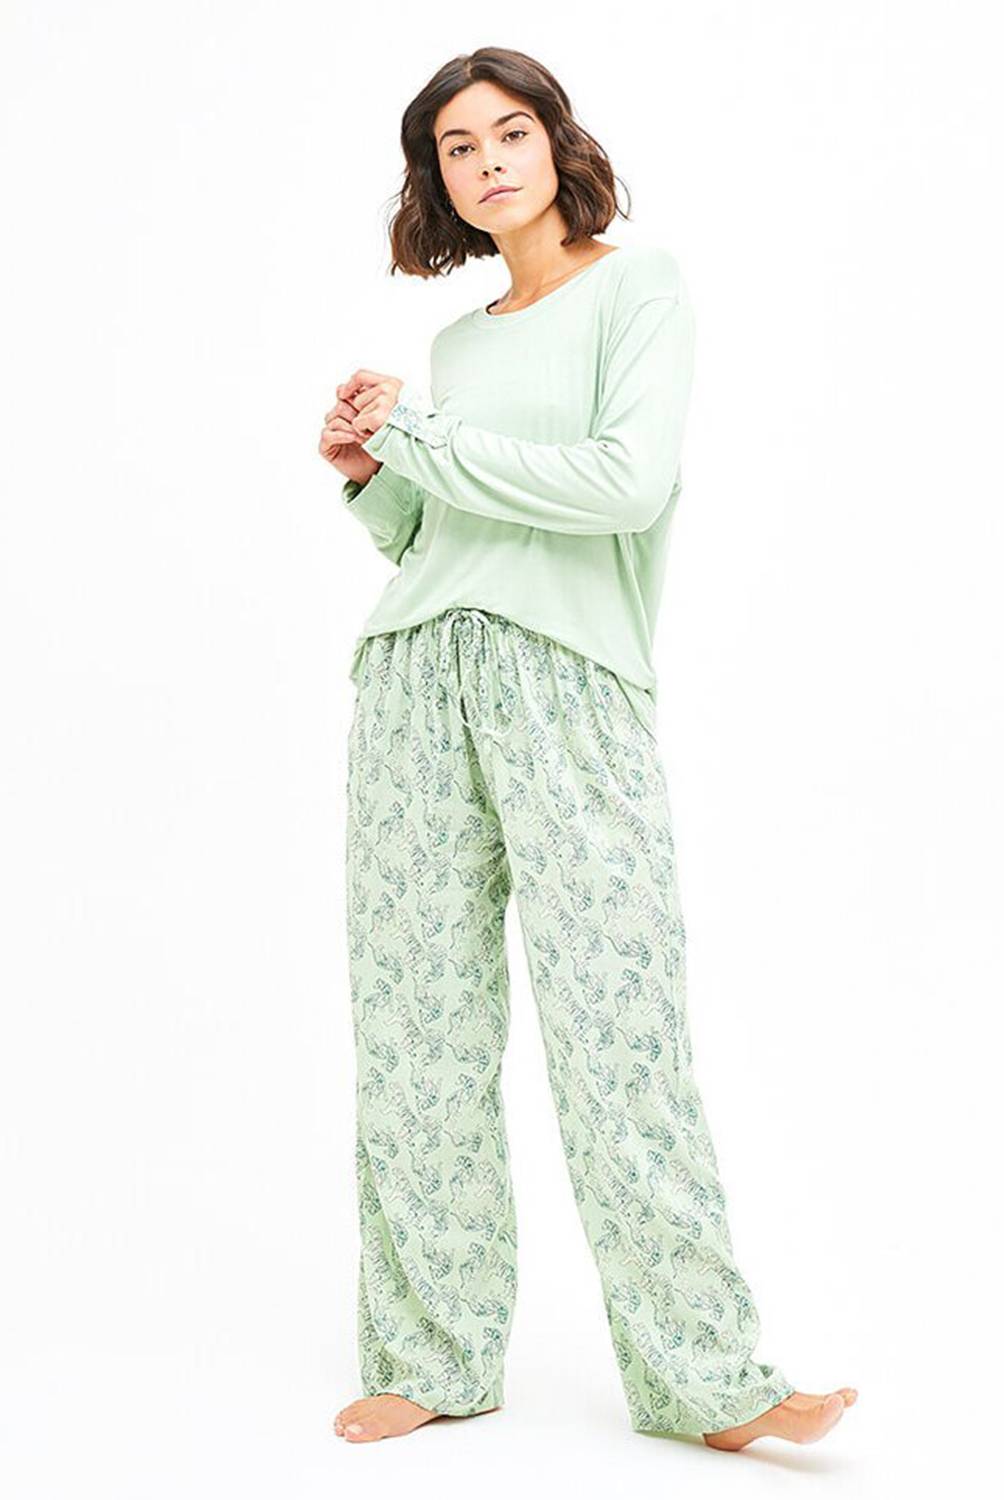 LOUNGE - Pijama Mujer Conjunto Polera Tigres Aqua